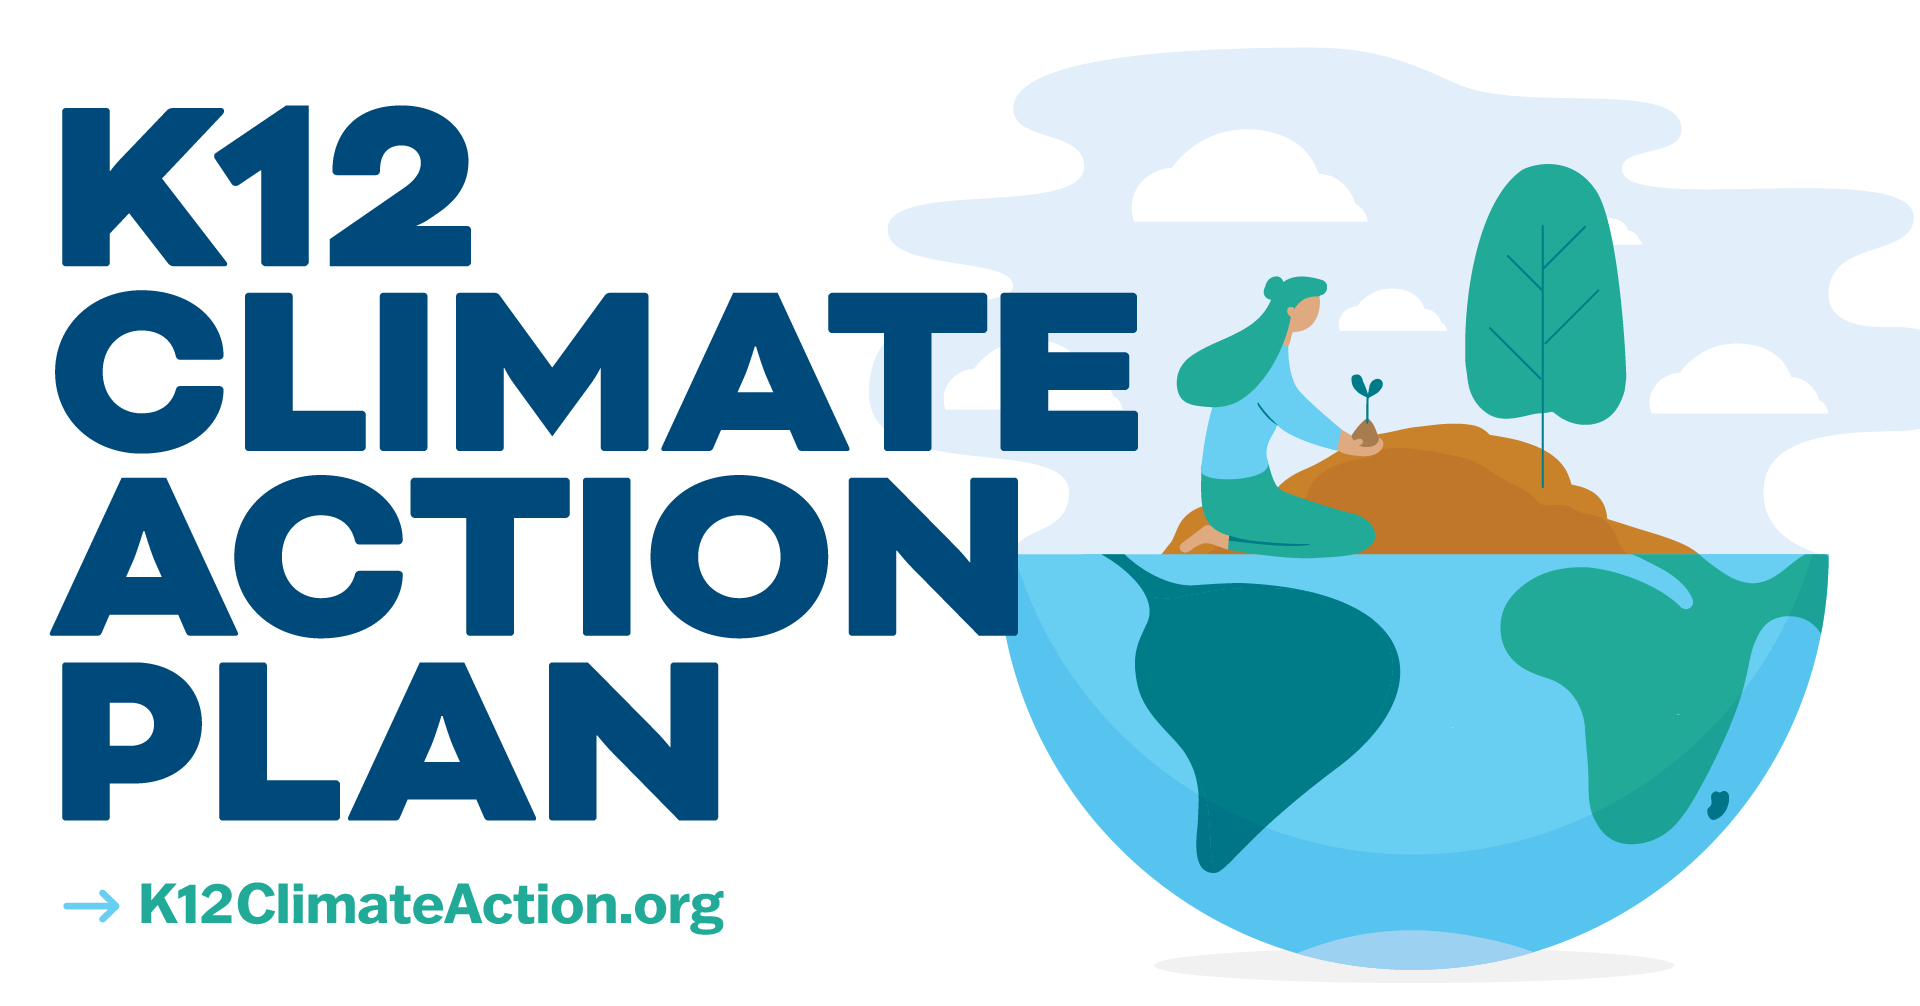 K12 Climate Action Plan Planet Social Event